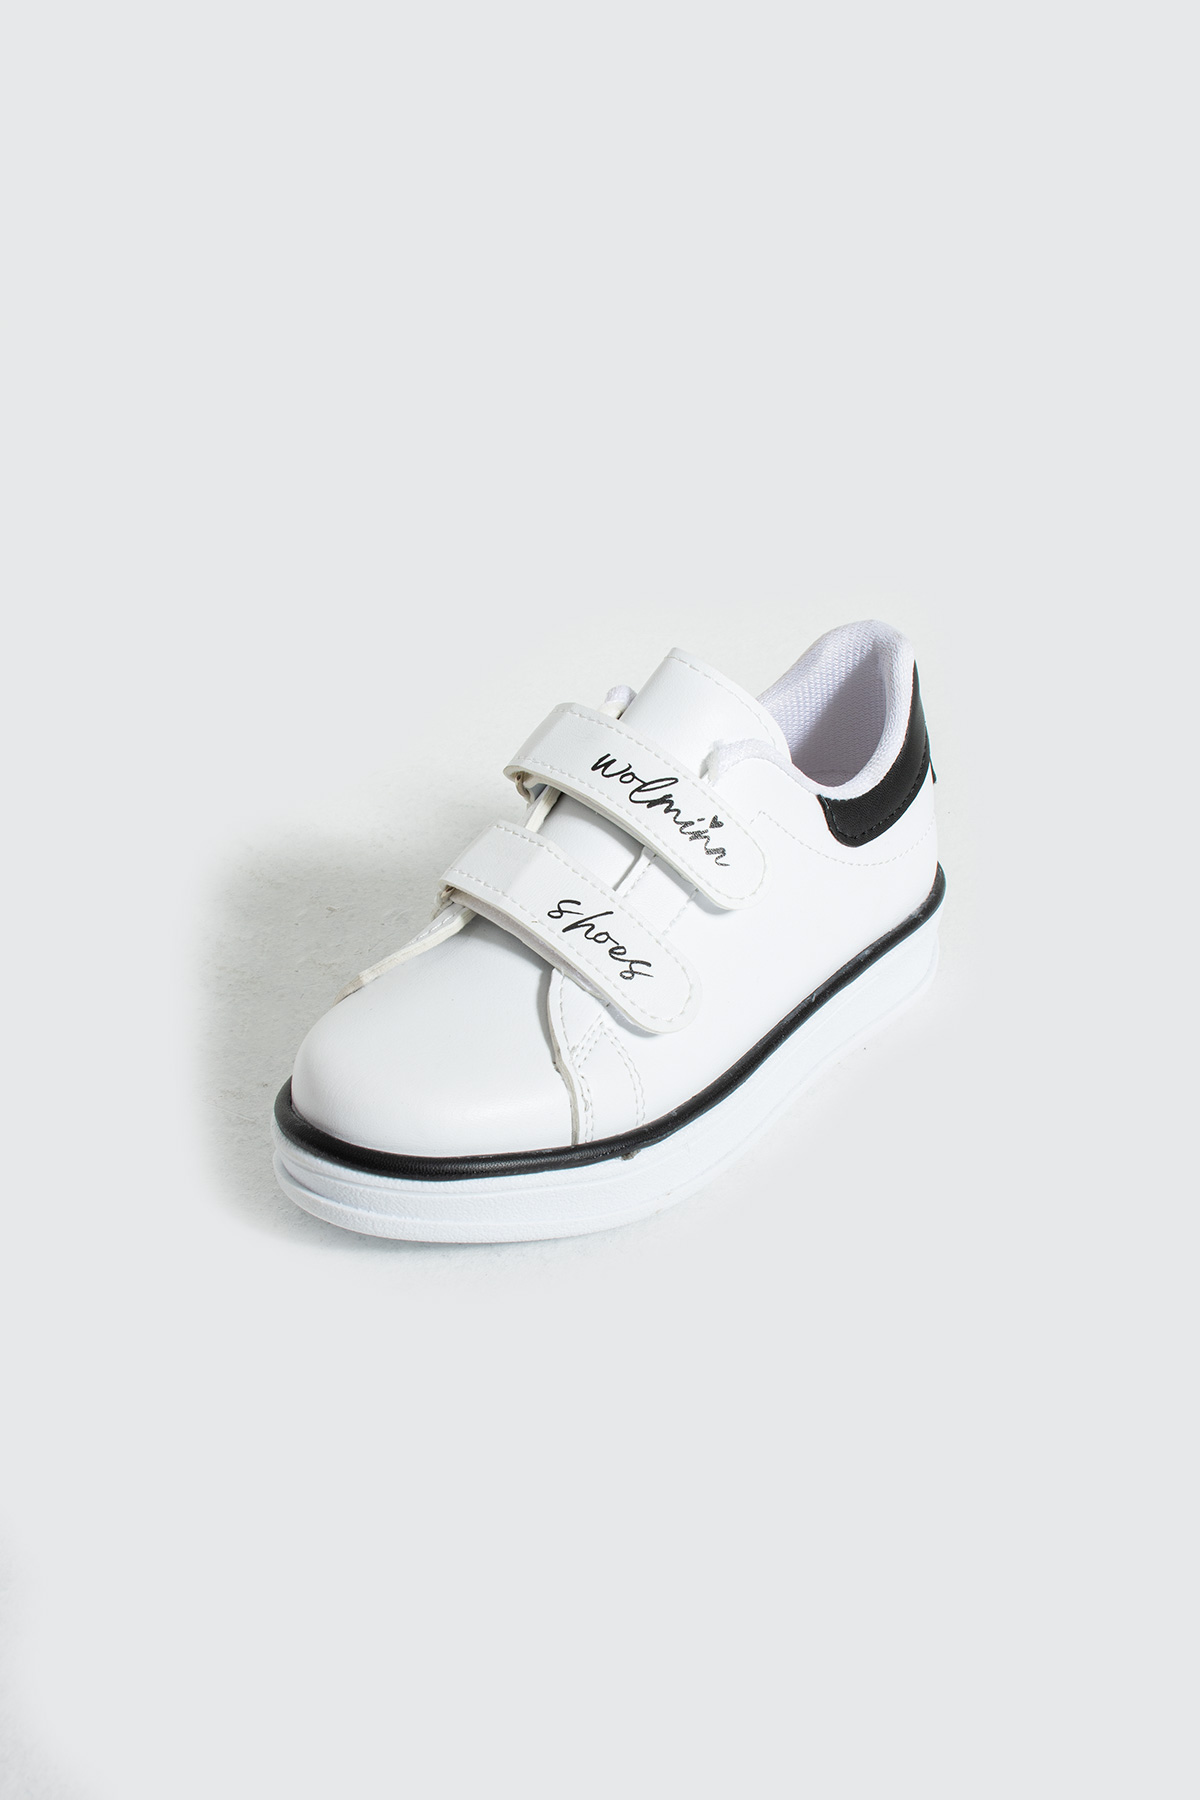 Pembe Potin Rahat Taban Cırtlı Çocuk Sneaker 001-70-24BSiyah - Beyaz